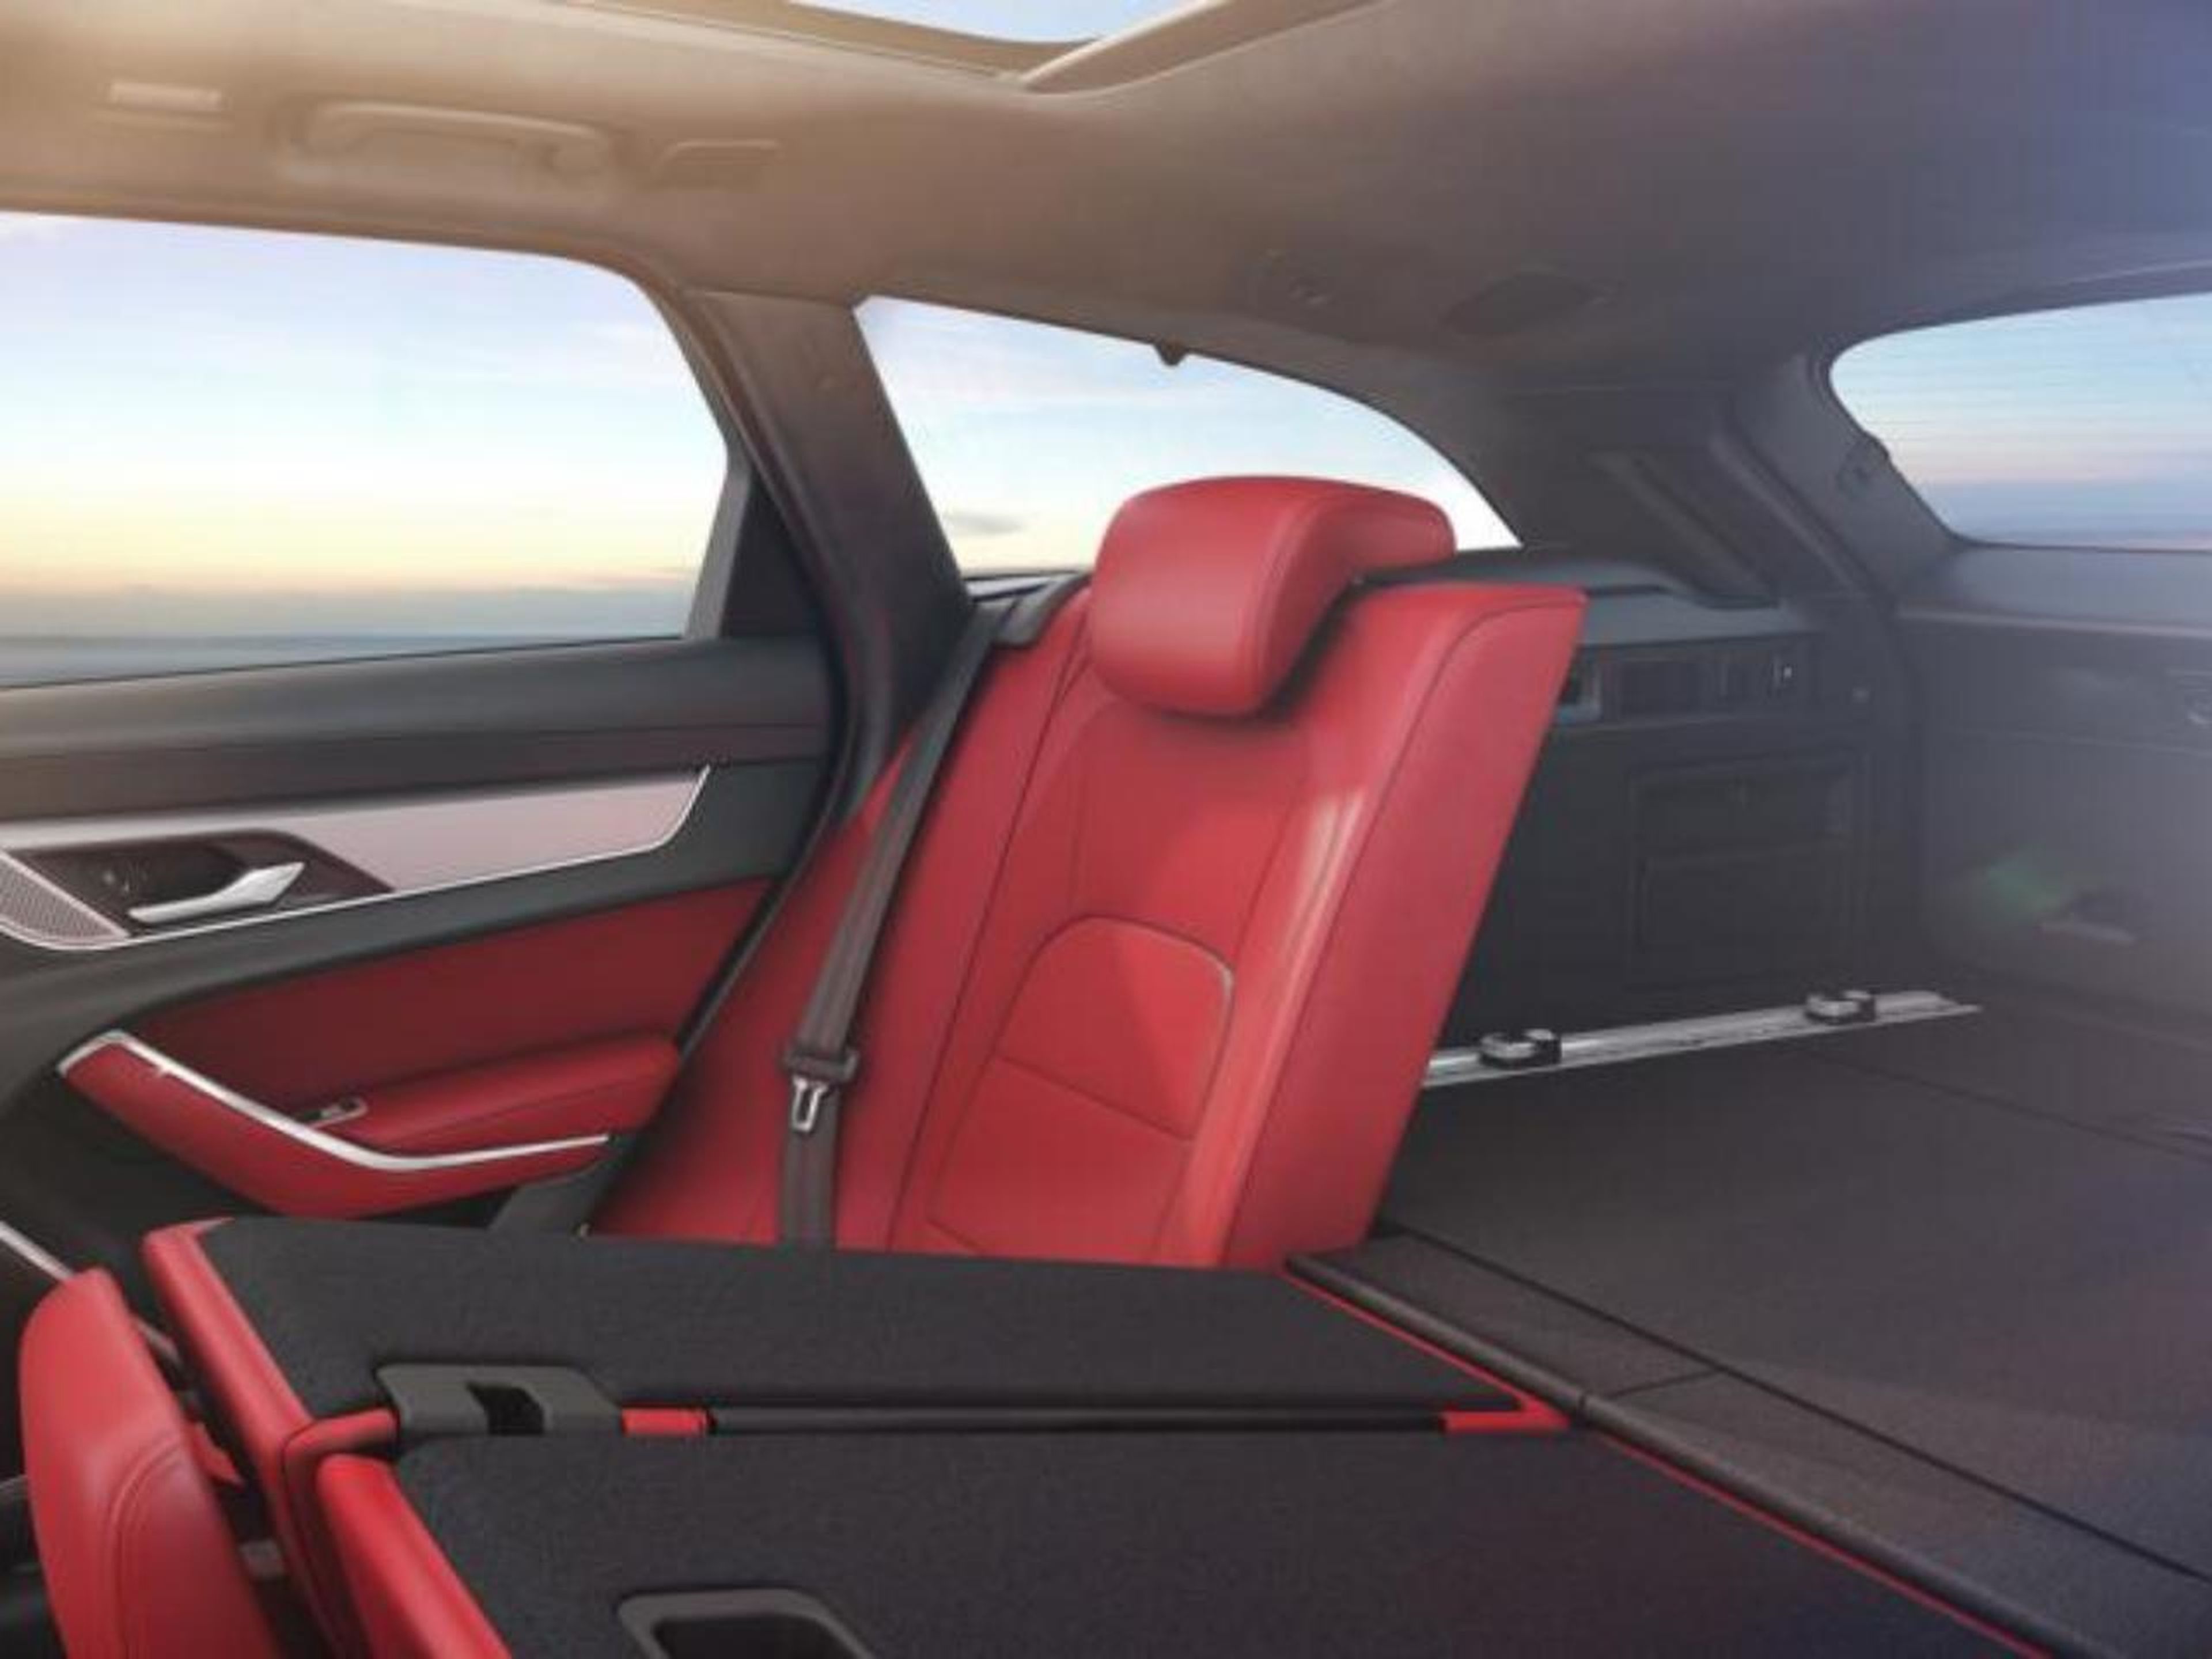 Jaguar XF interior